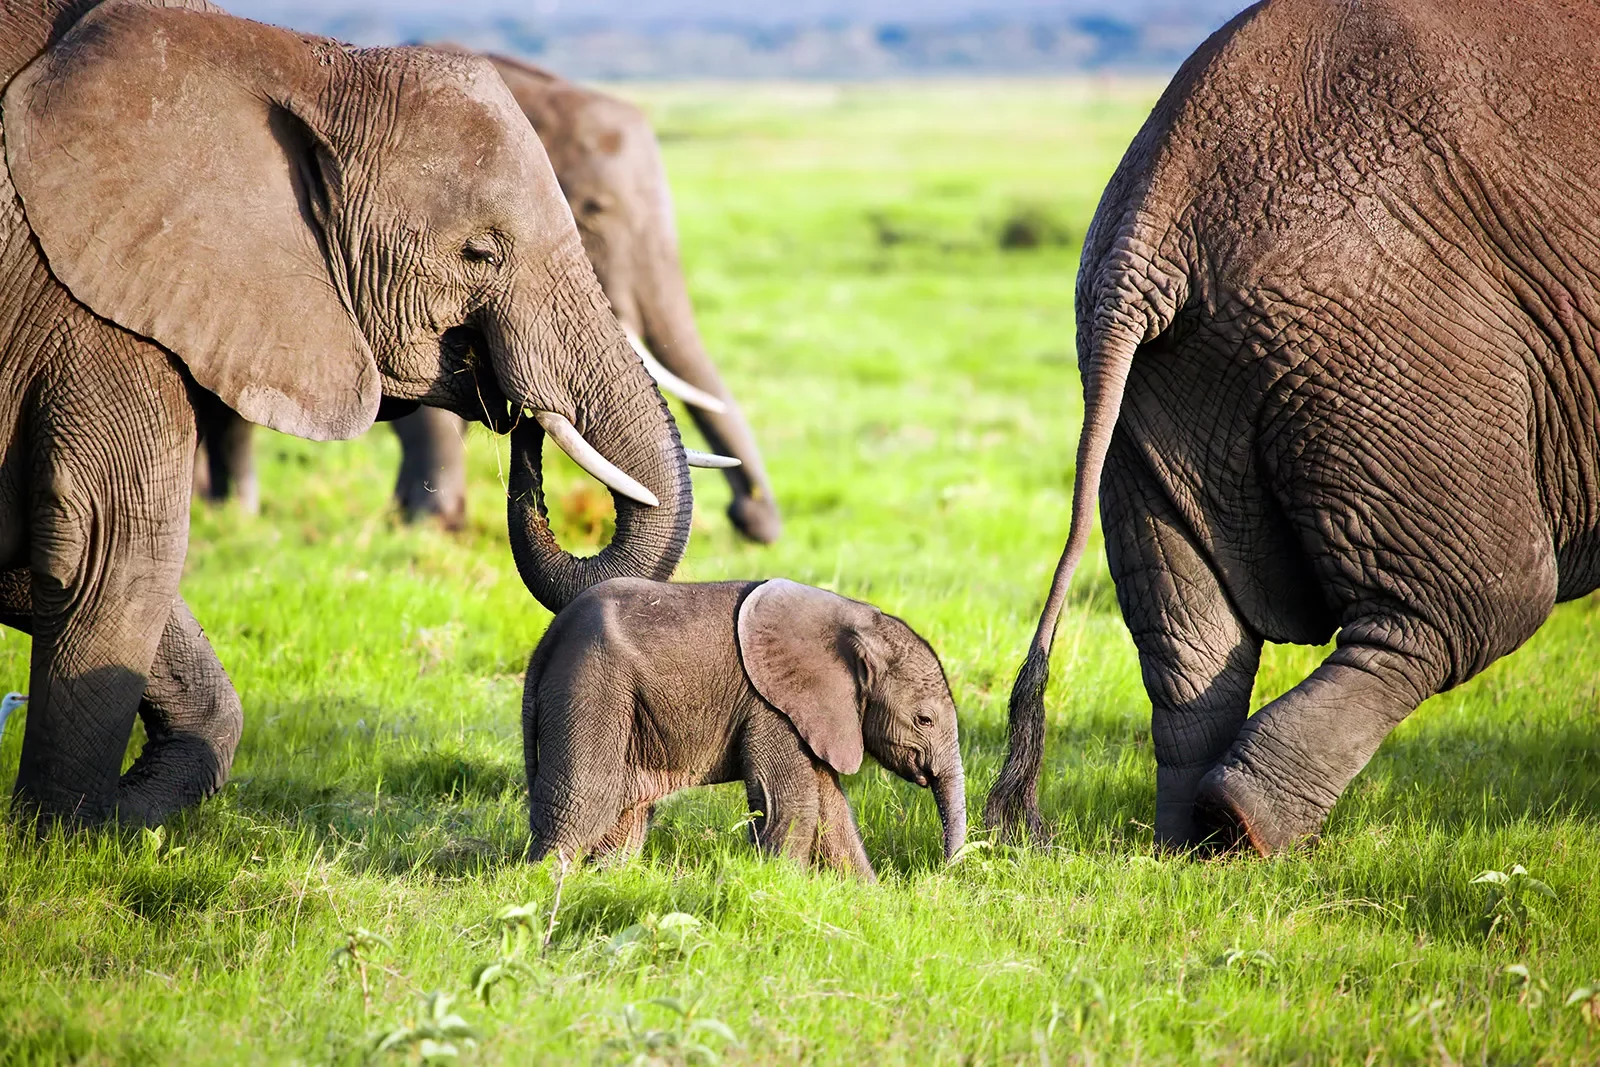 Baby elephant amid a group of adult elephants